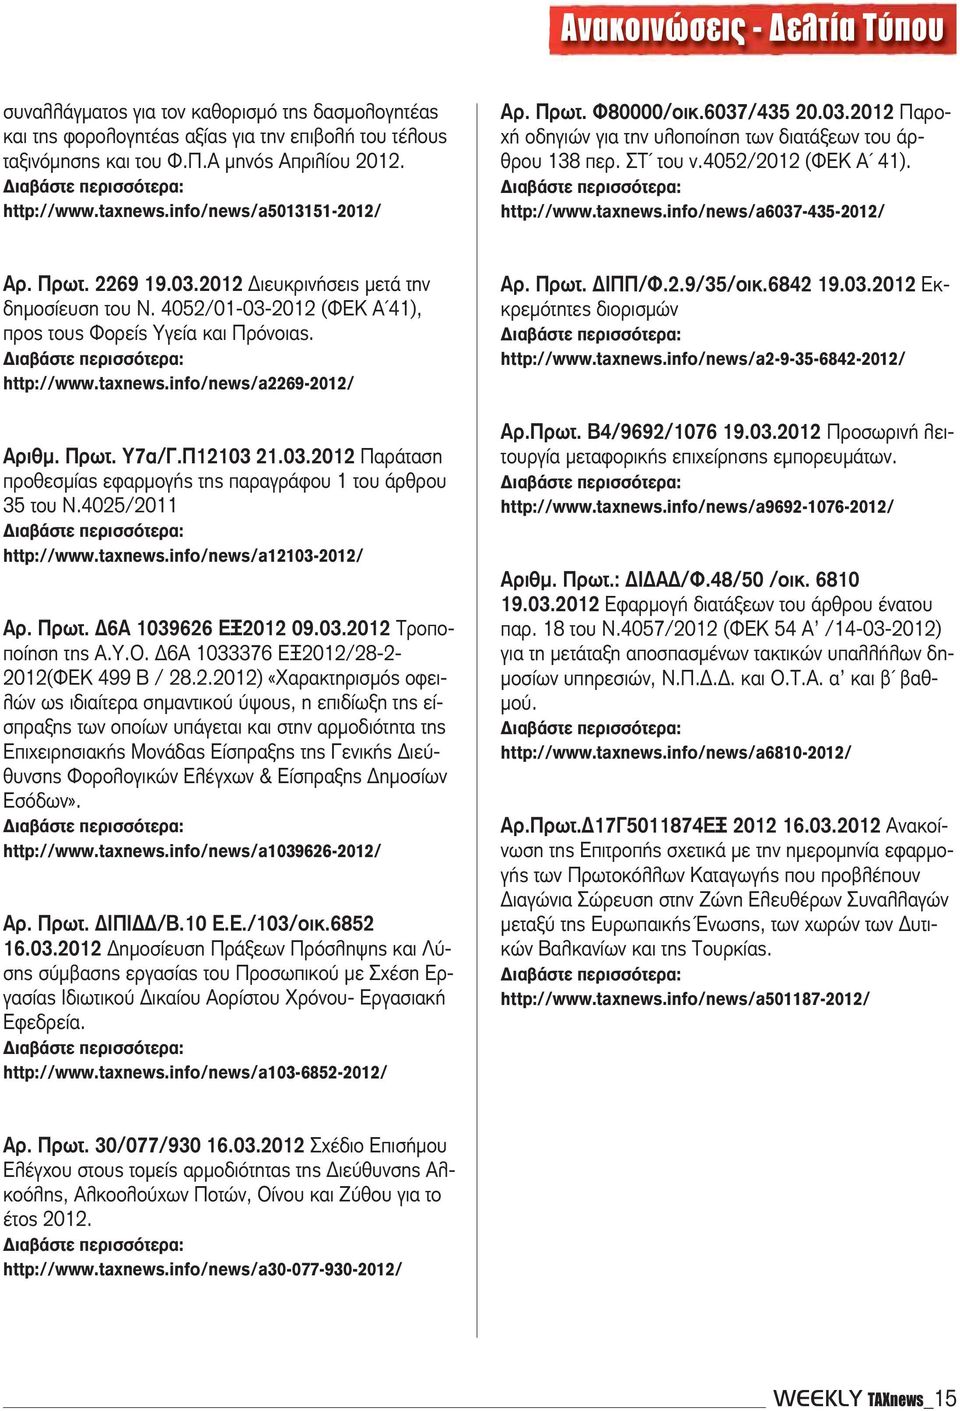 info/news/a6037-435-2012/ Αρ. Πρωτ. 2269 19.03.2012 Διευκρινήσεις μετά την δημοσίευση του Ν. 4052/01-03-2012 (ΦΕΚ Α 41), προς τους Φορείς Υγεία και Πρόνοιας. http://www.taxnews.